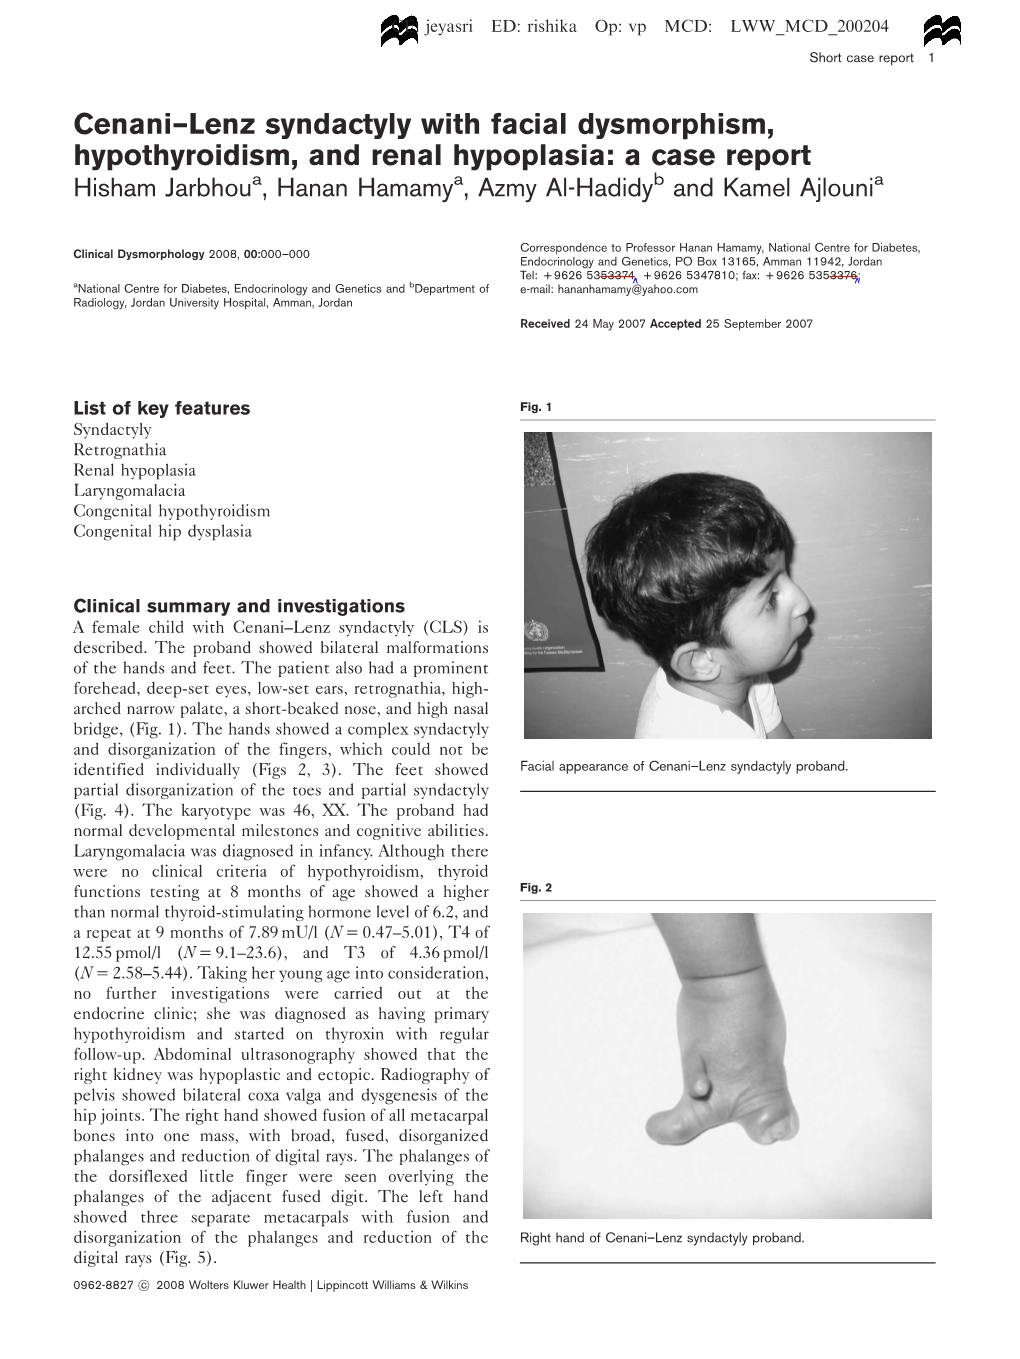 Cenani–Lenz Syndactyly with Facial Dysmorphism, Hypothyroidism, and Renal Hypoplasia: a Case Report Hisham Jarbhoua, Hanan Hamamya, Azmy Al-Hadidyb and Kamel Ajlounia